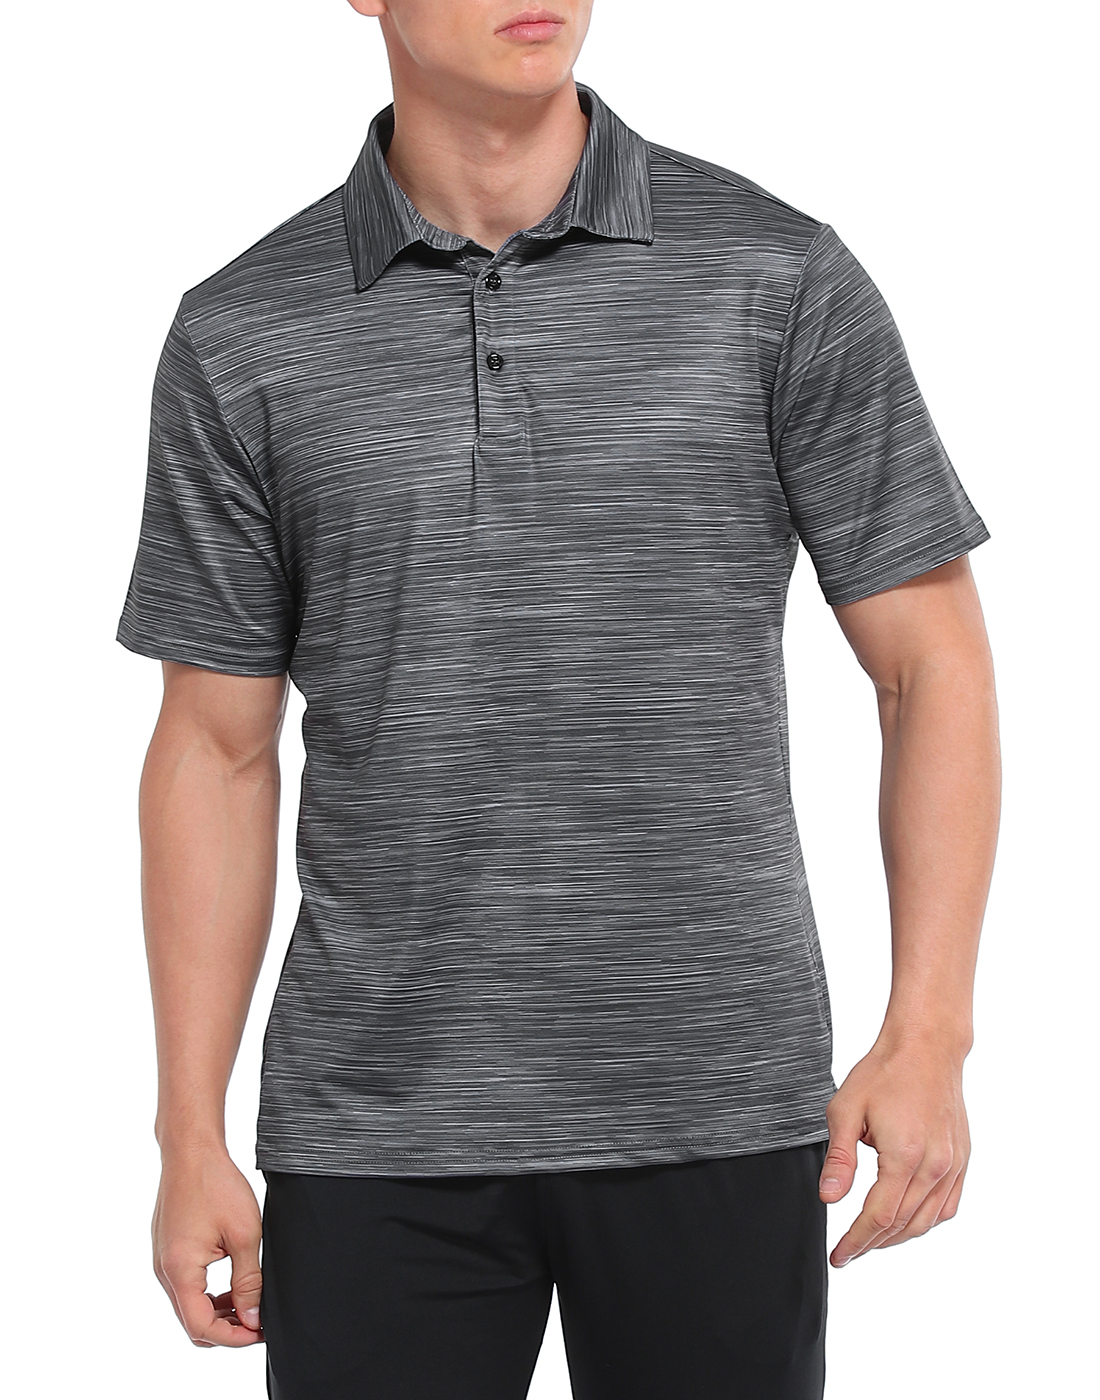 LRD Golf Shirts for Men UPF 50 Moisture Wicking Short Sleeve Polo Shirt ...